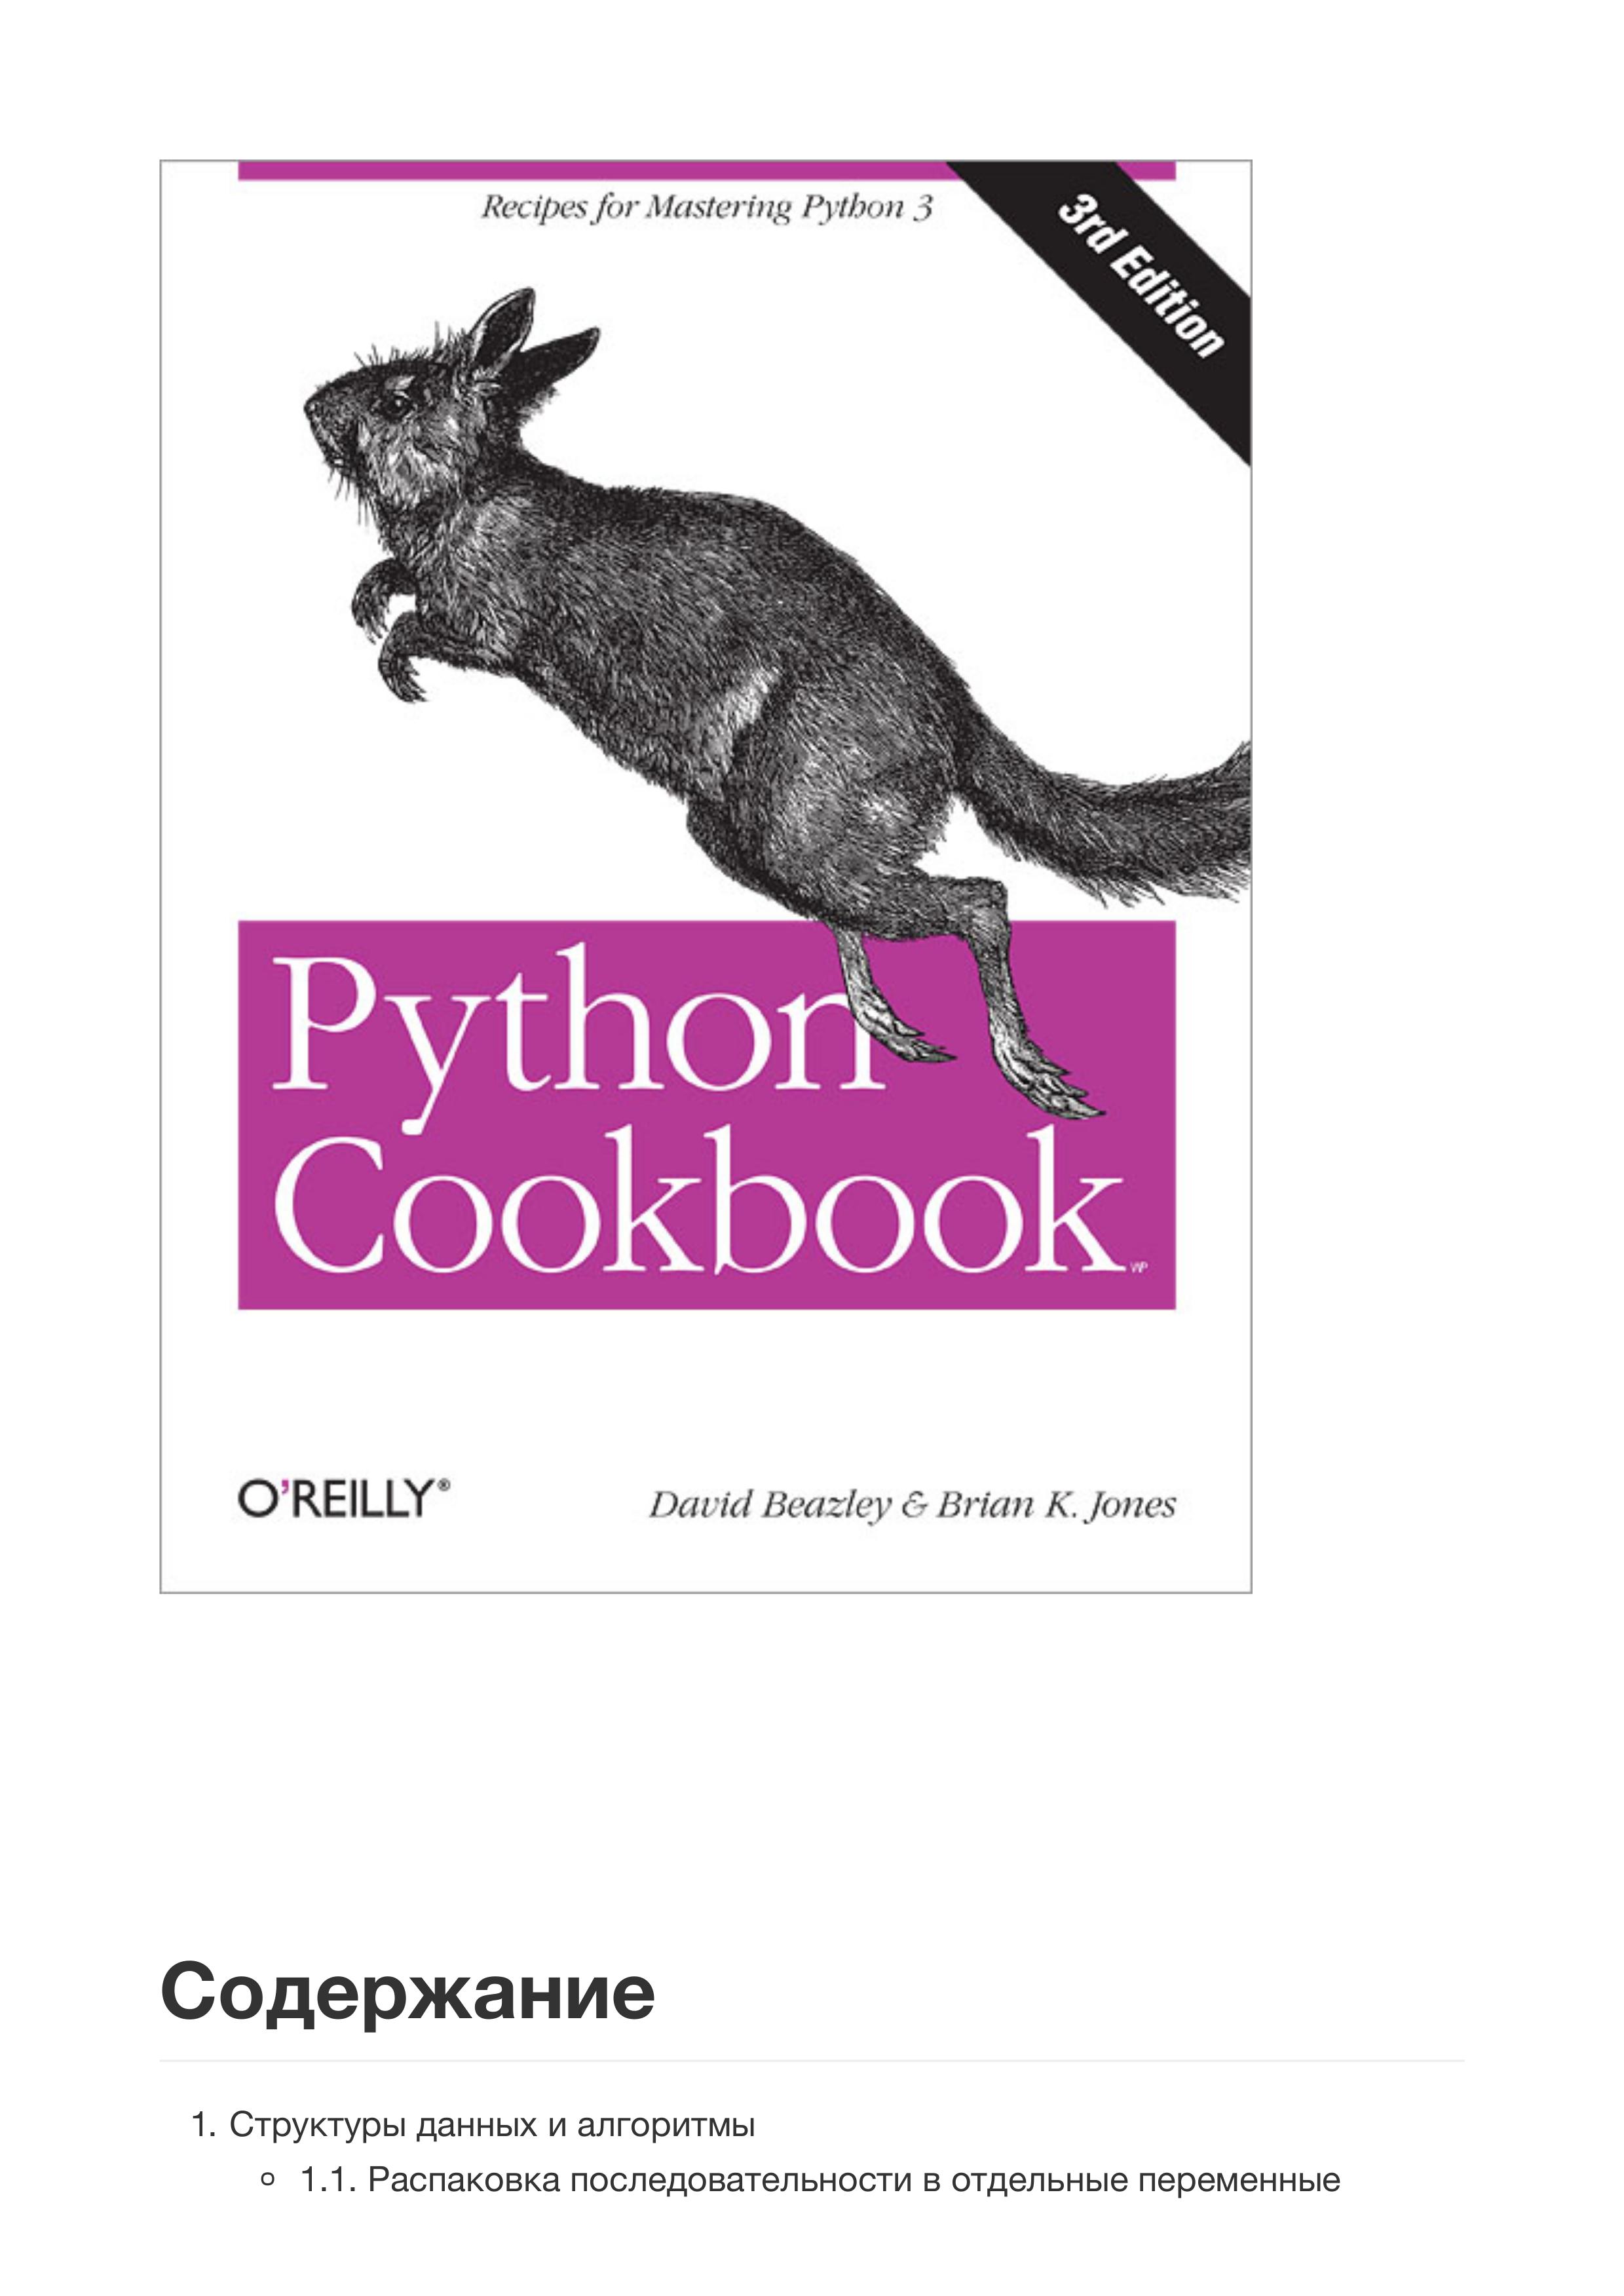 Python Cookbook: No. 3: Recipes For Mastering Python by David Beazley, Brian K. Jones